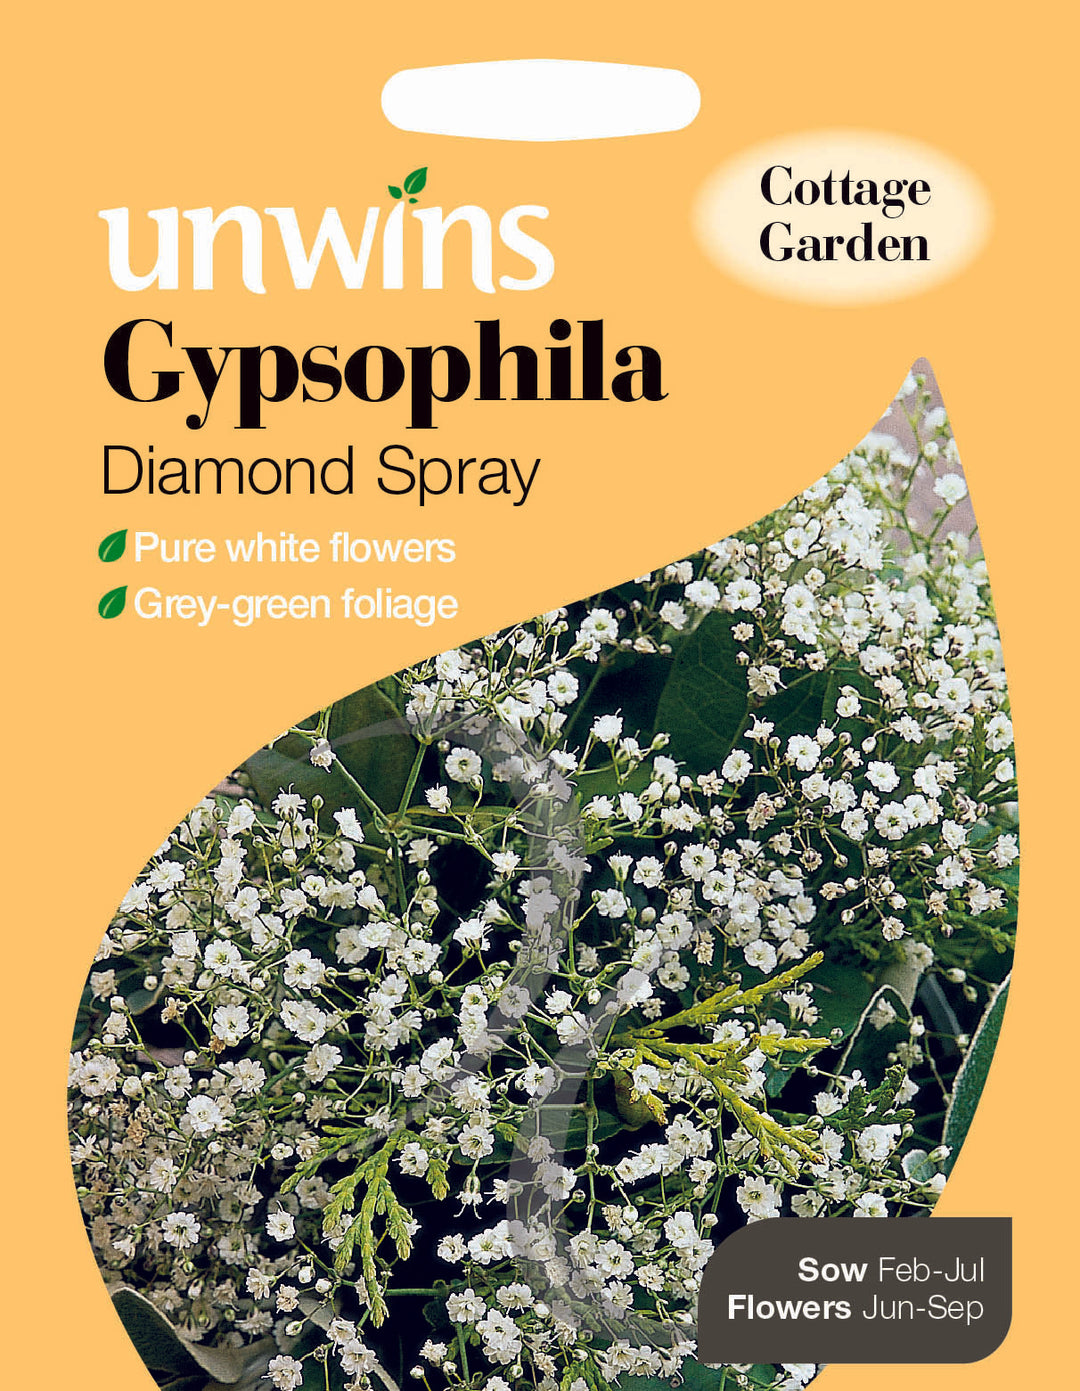 Gypsophila Diamond Spray